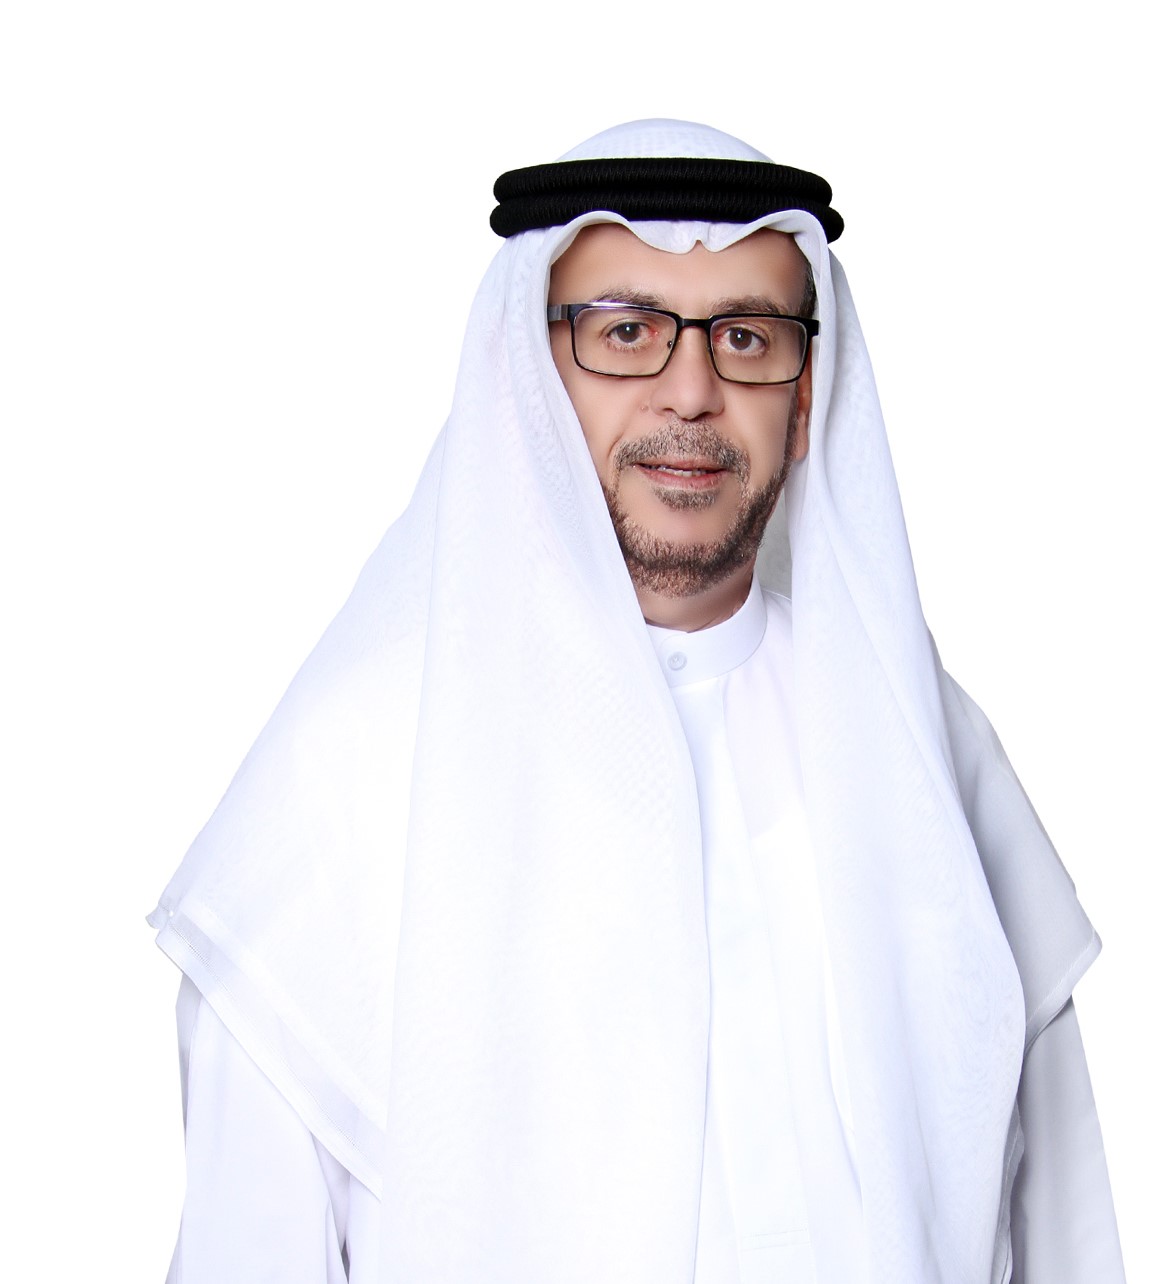 Abdullah Al Muwaiji: The UAE's joining BRICS reflects the UAE's economic openness policy